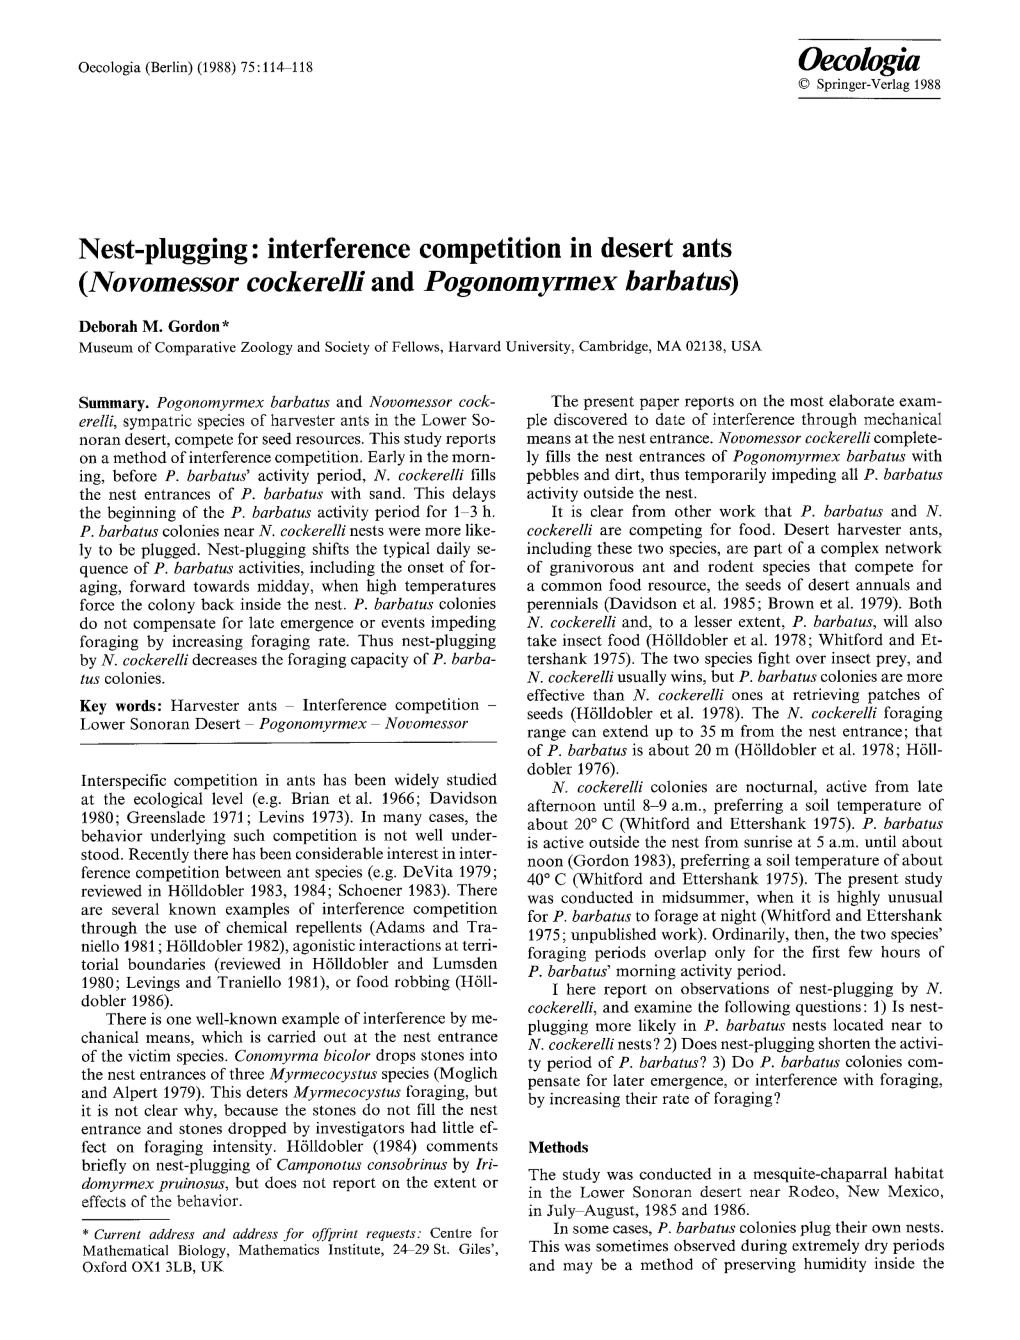 Nest-Plugging: Interference Competition in Desert Ants (Novomessor Cockerelh"And Pogonomyrmex Barbatus)